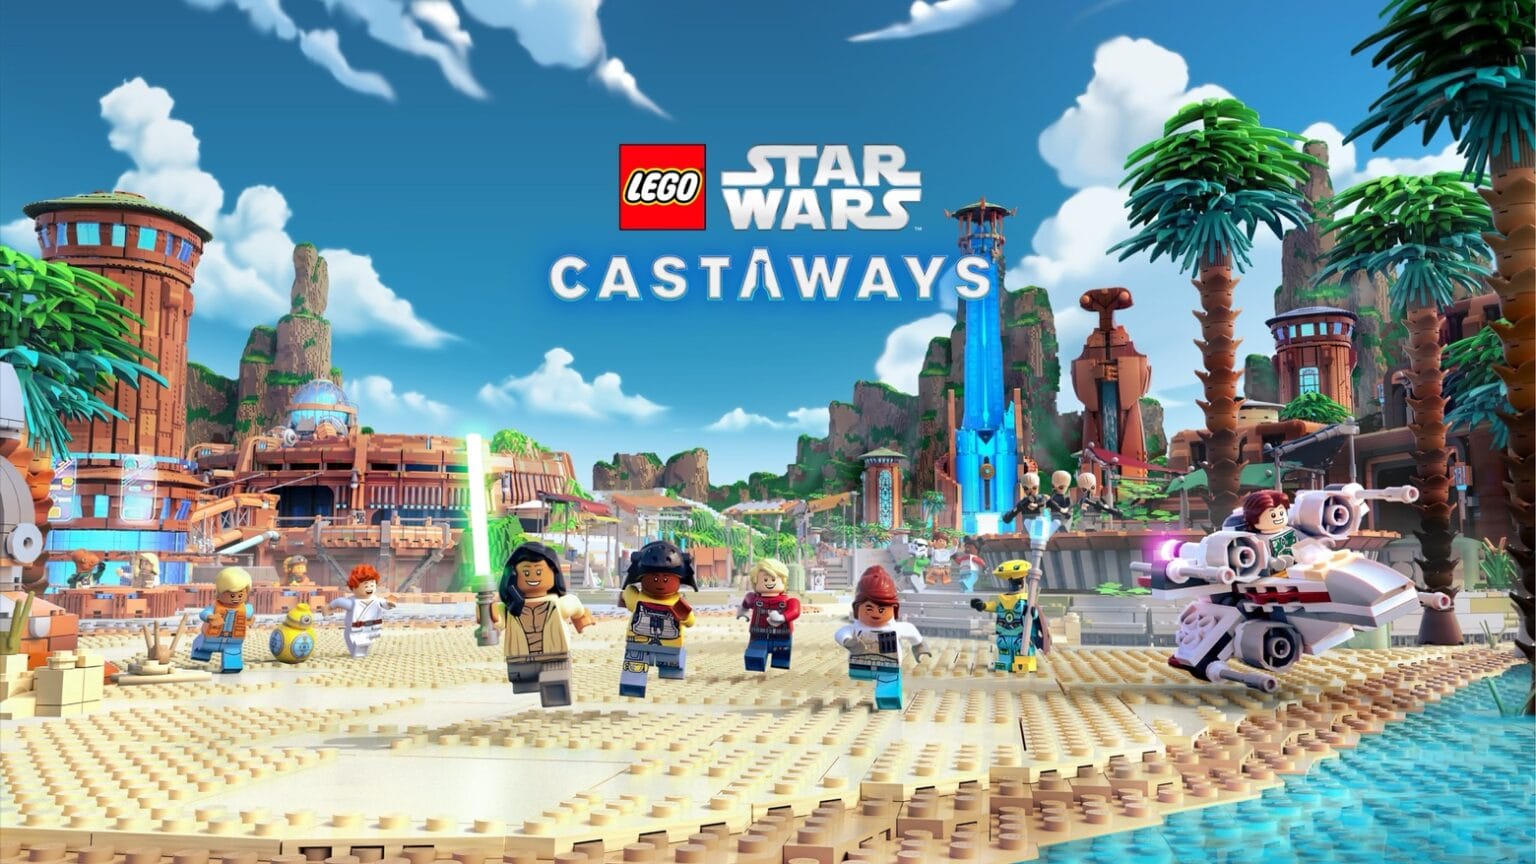 ‘Lego Star Wars: Castaways‘ will debut on Apple Arcade in November, 2021.